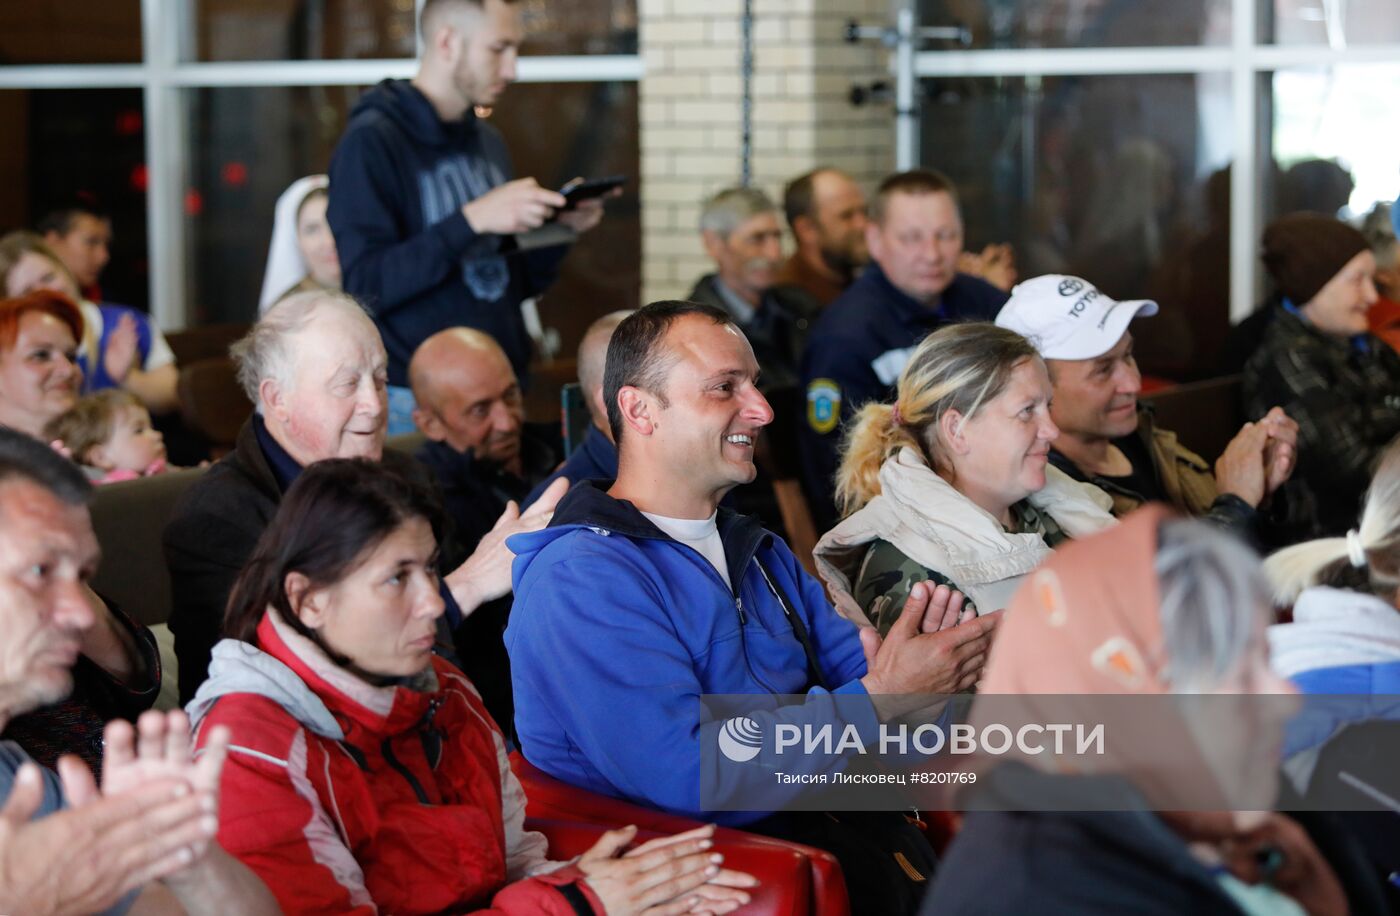 Актер и депутат Госдумы Д. Певцов провел встречу с беженцами